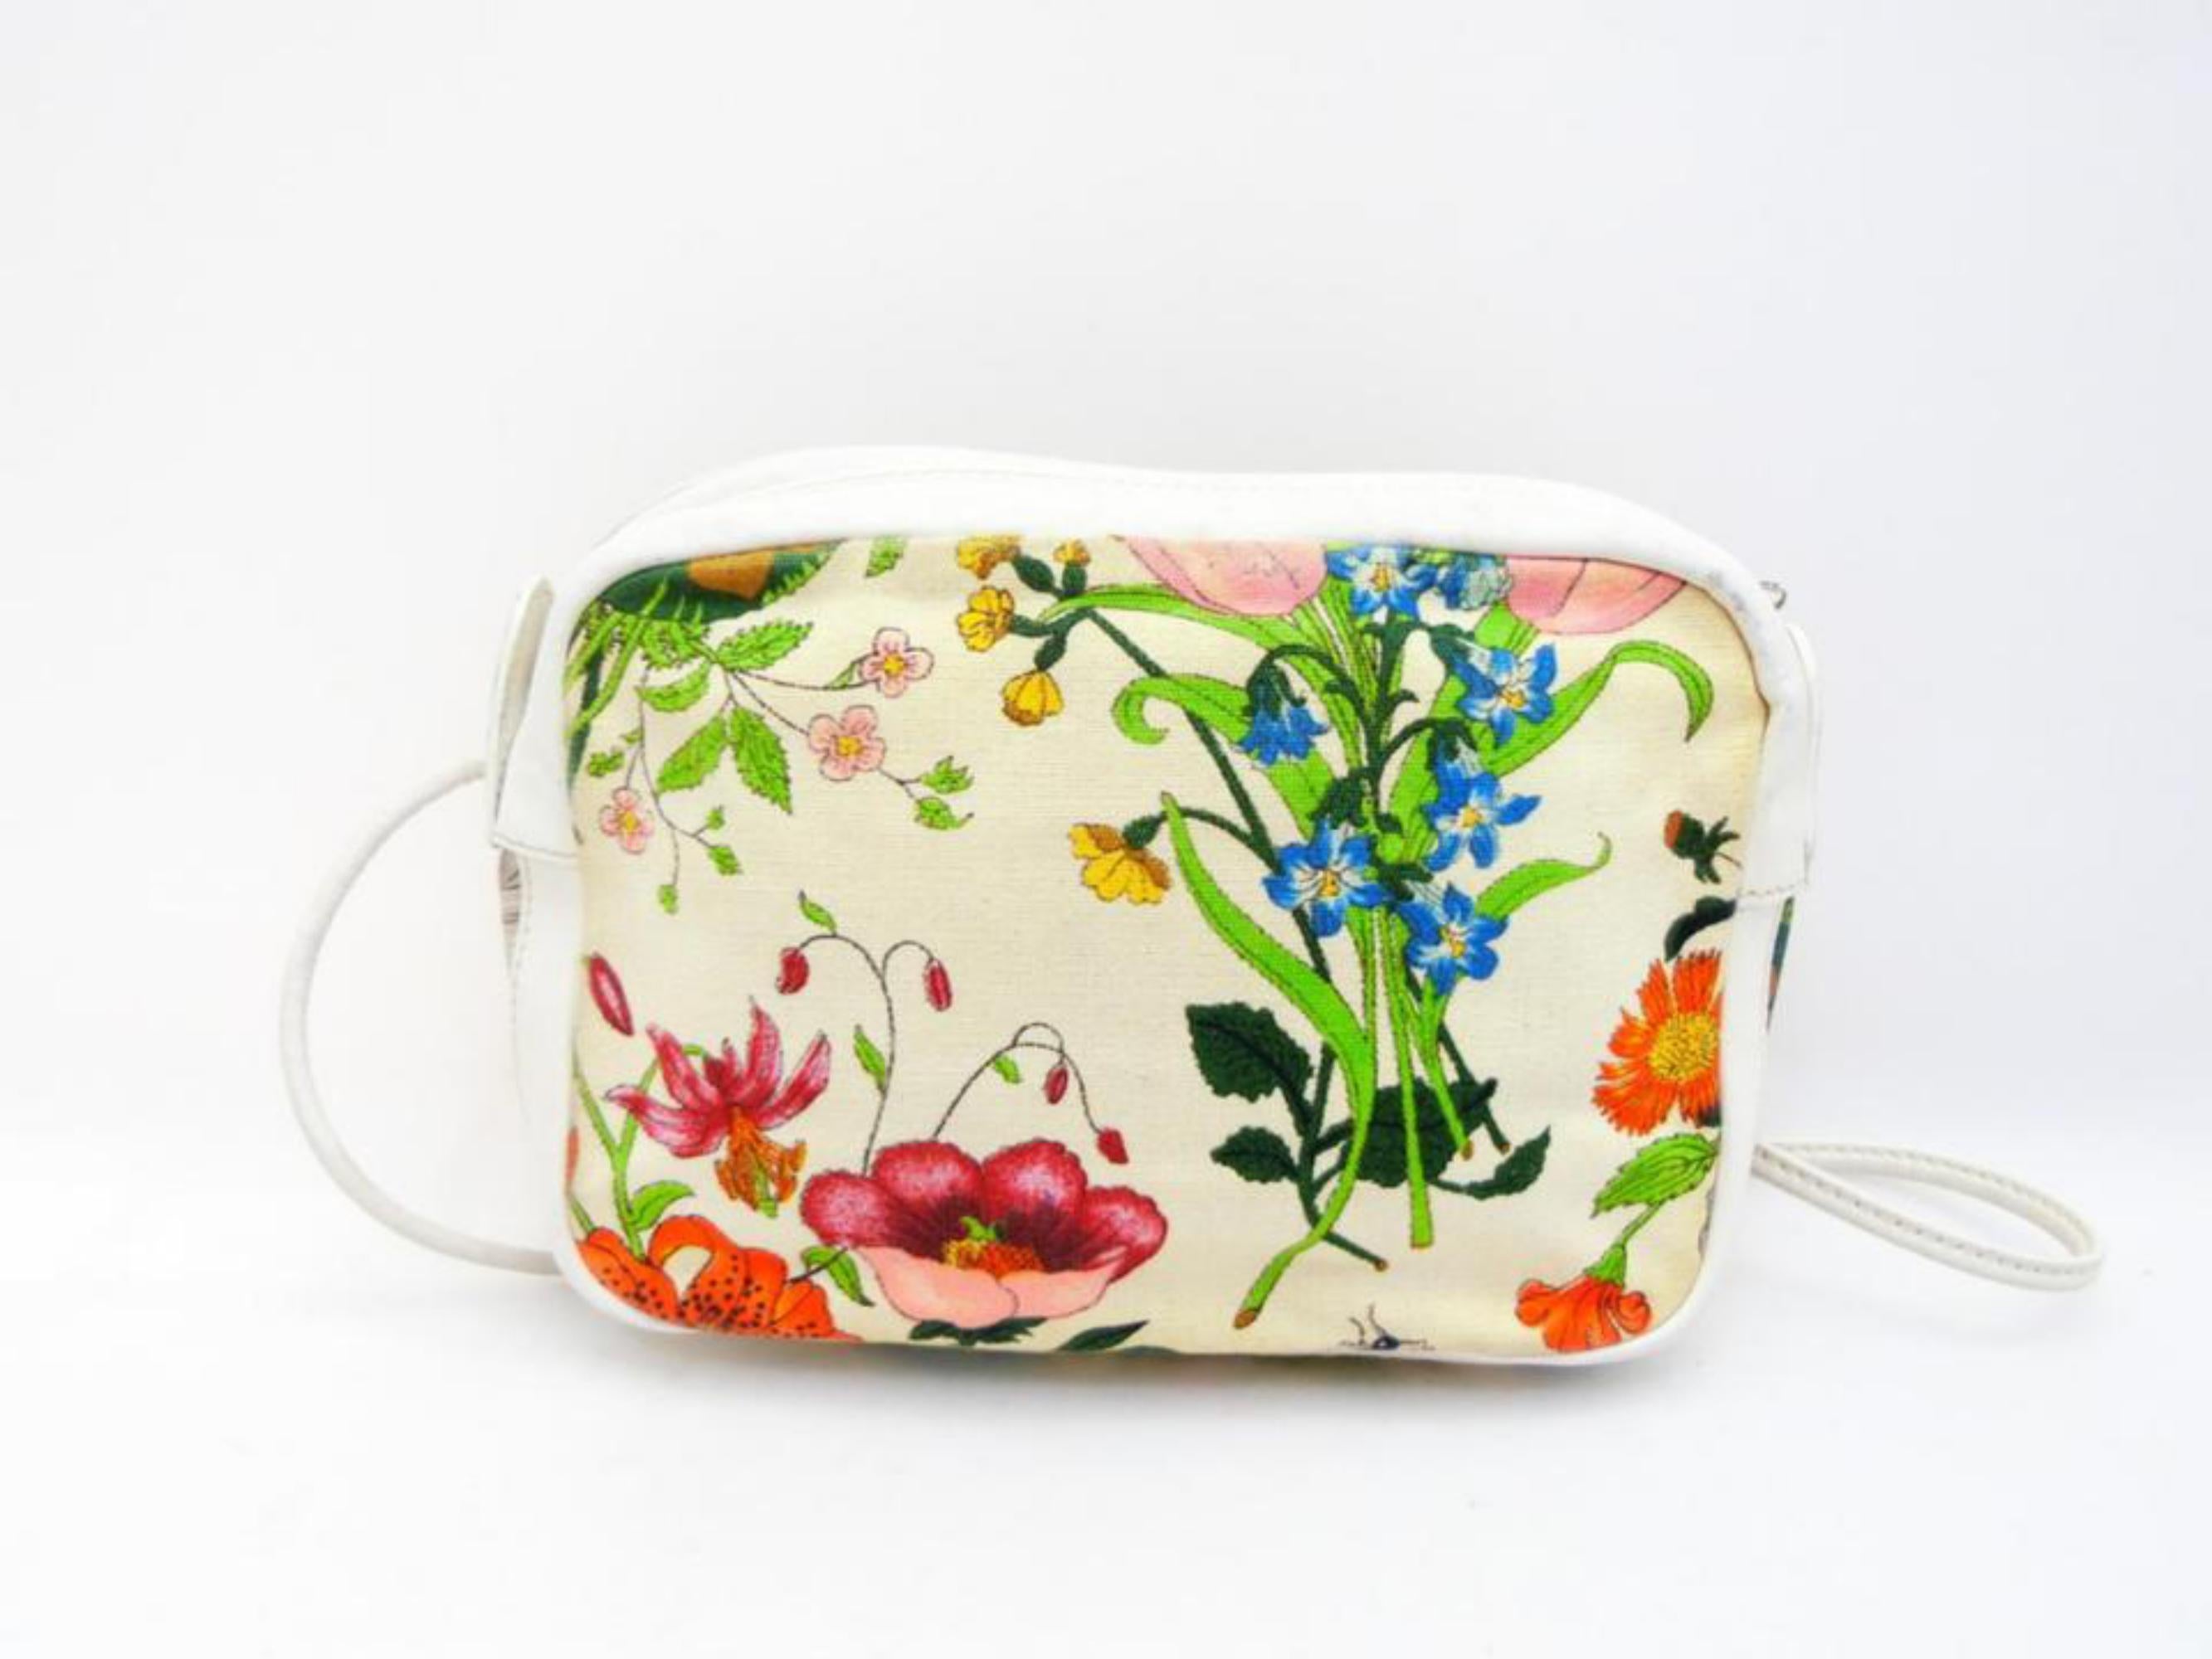 Gucci Multicolor Floral Disco Cross Body 232573 White Canvas Shoulder Bag For Sale 3